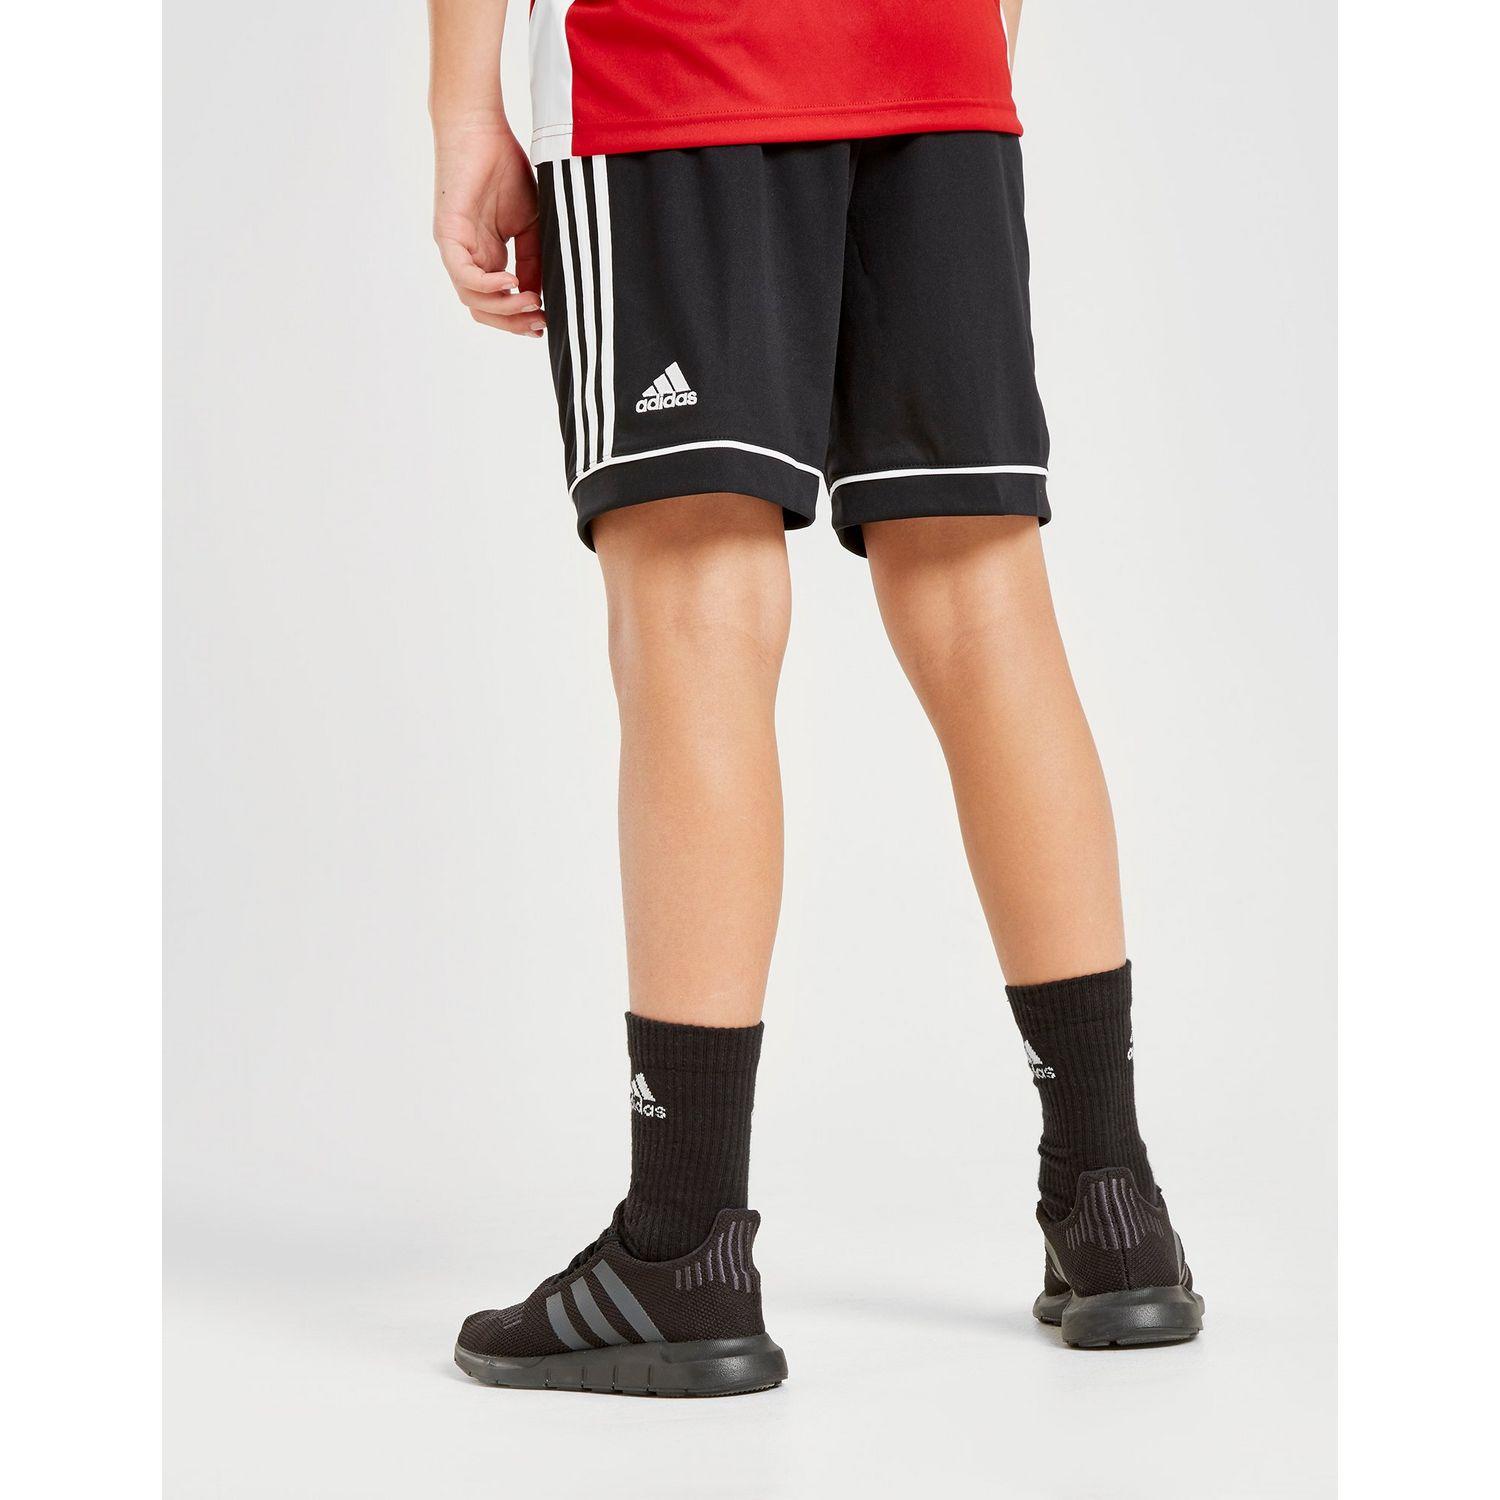 black adidas shorts junior